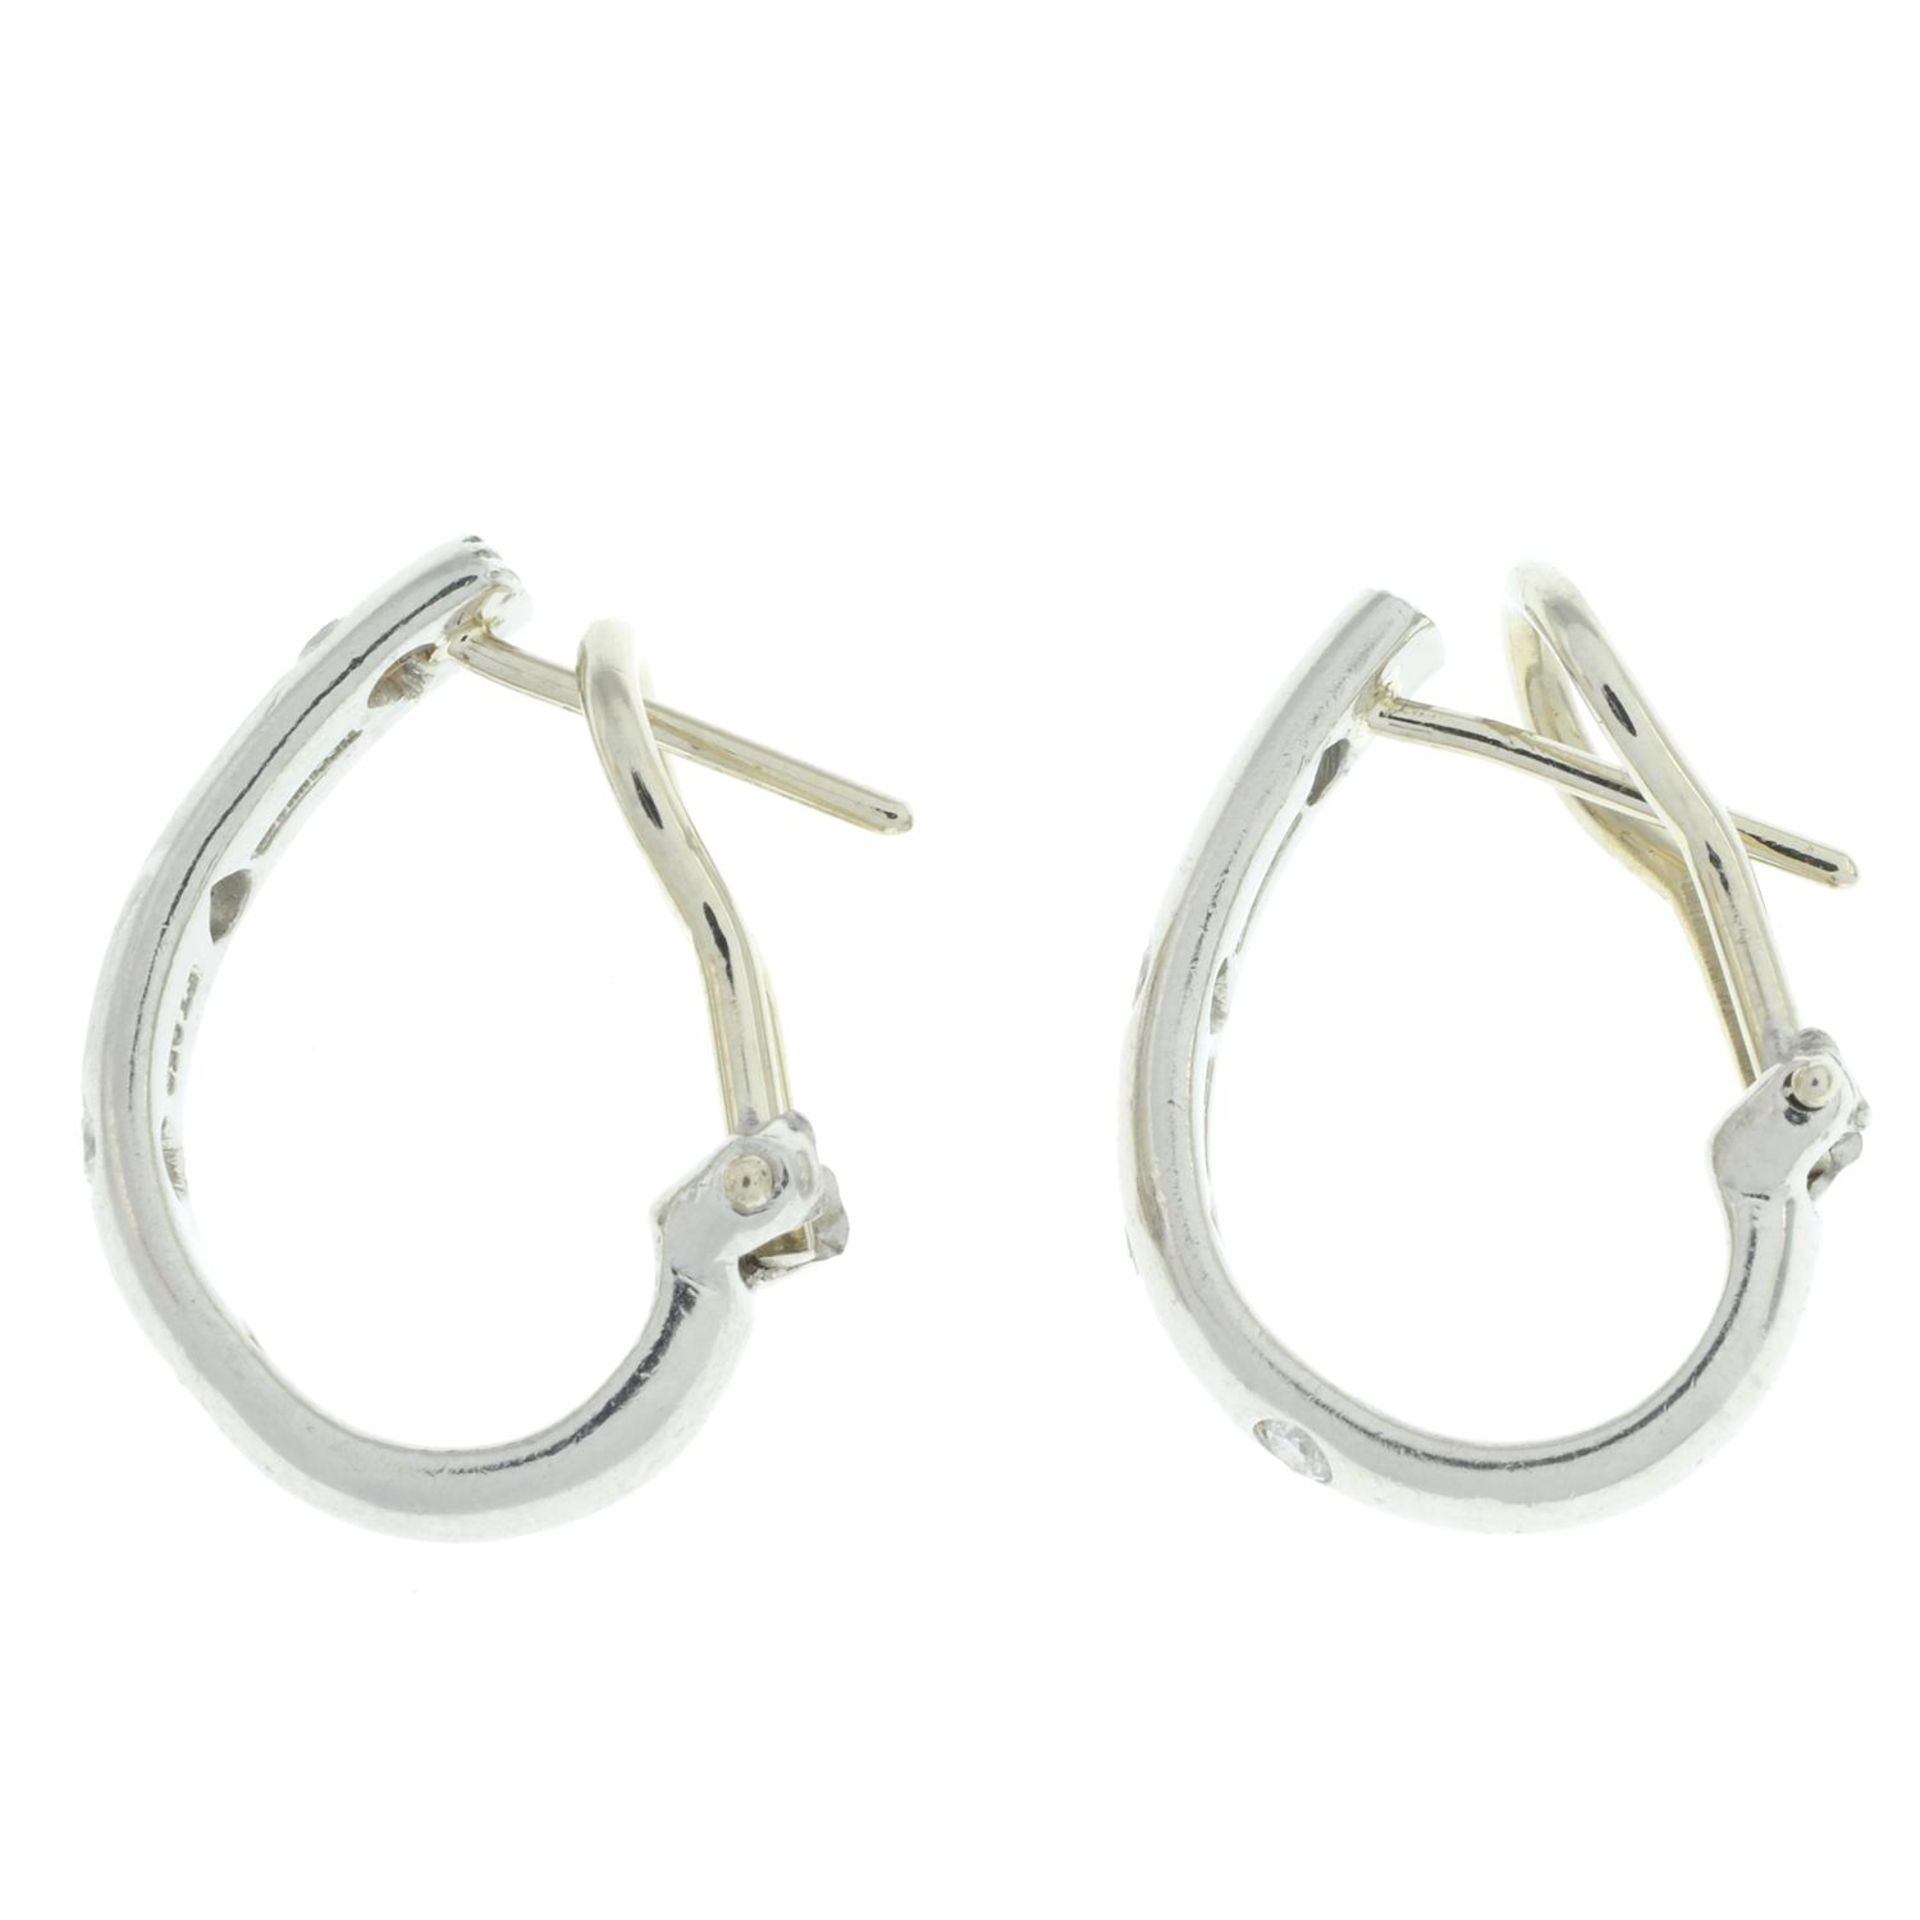 Diamond 'Etoile' earrings, by Tiffany & Co. - Image 3 of 4